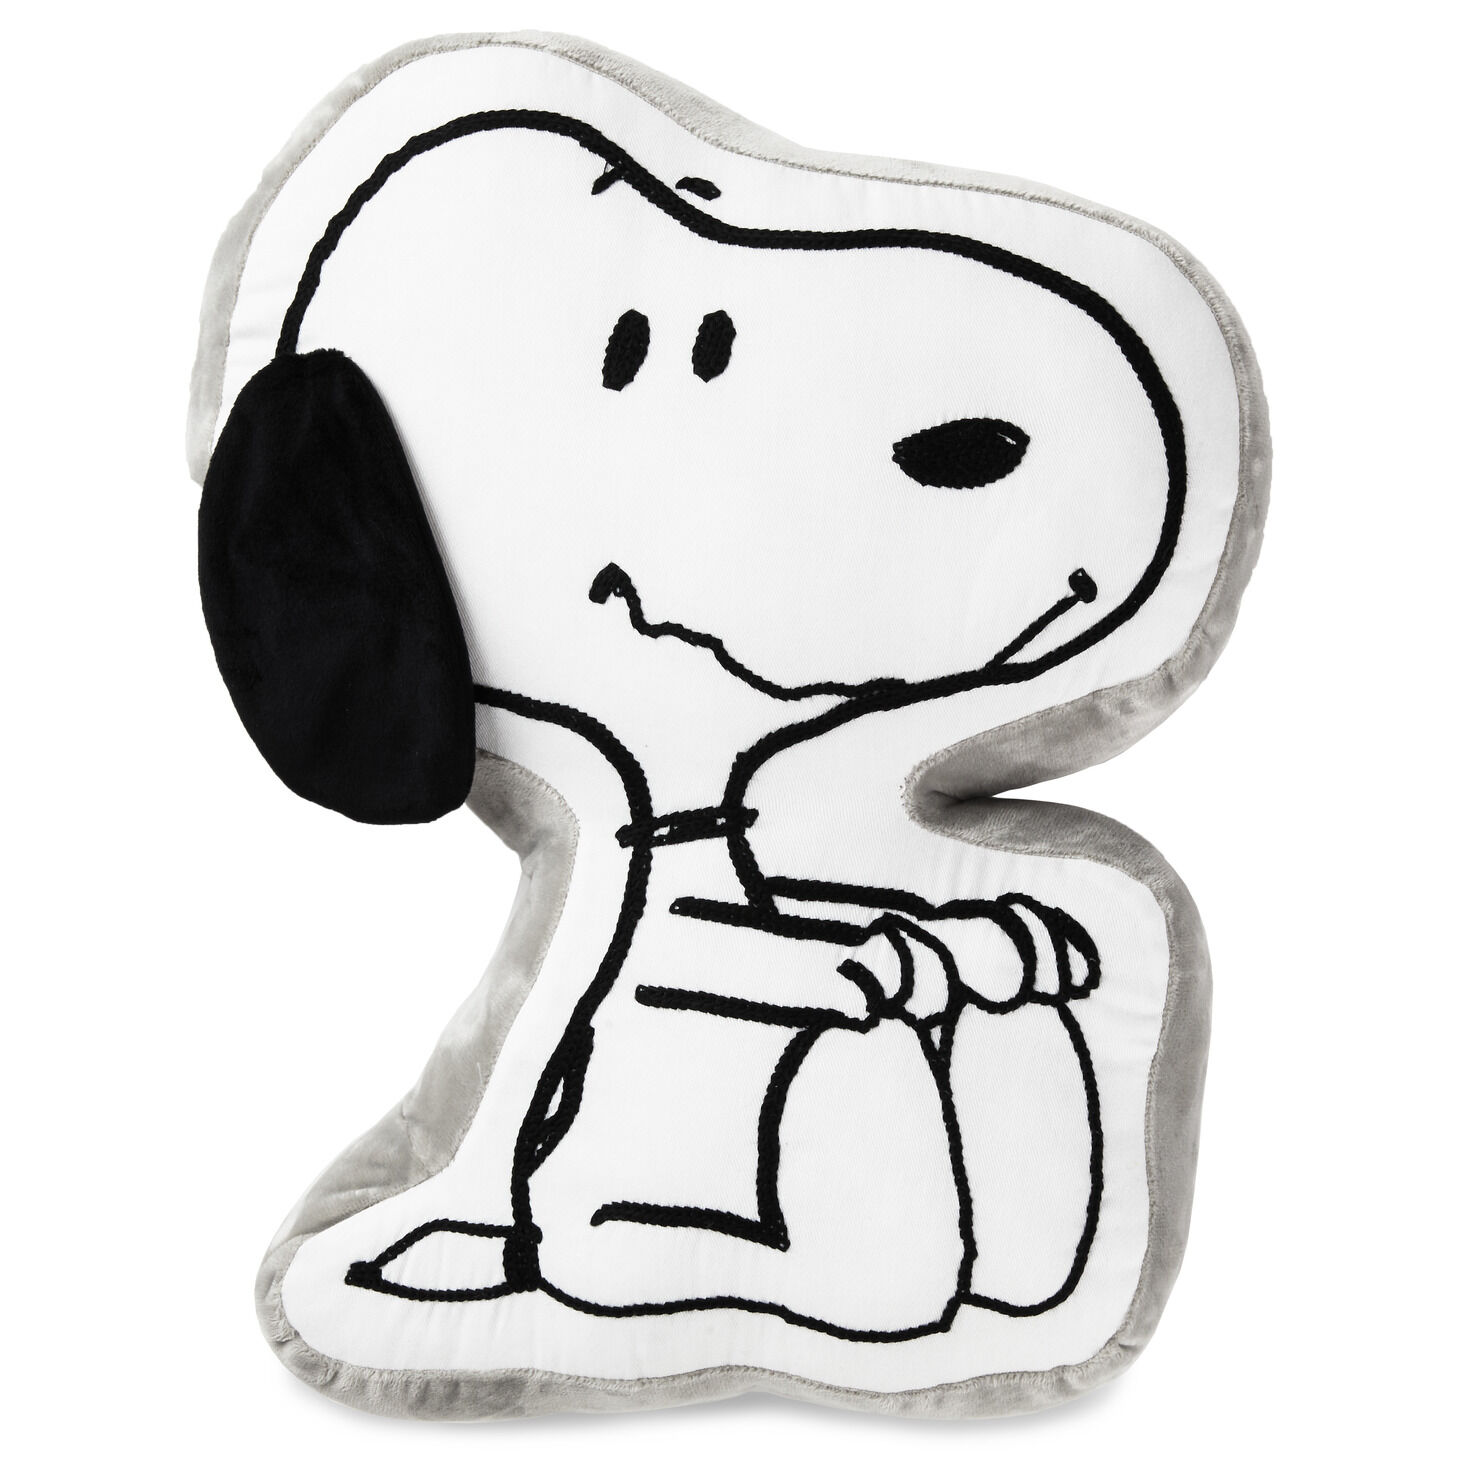 Peanuts® Snoopy Pillow - Pillows & Blankets - Hallmark